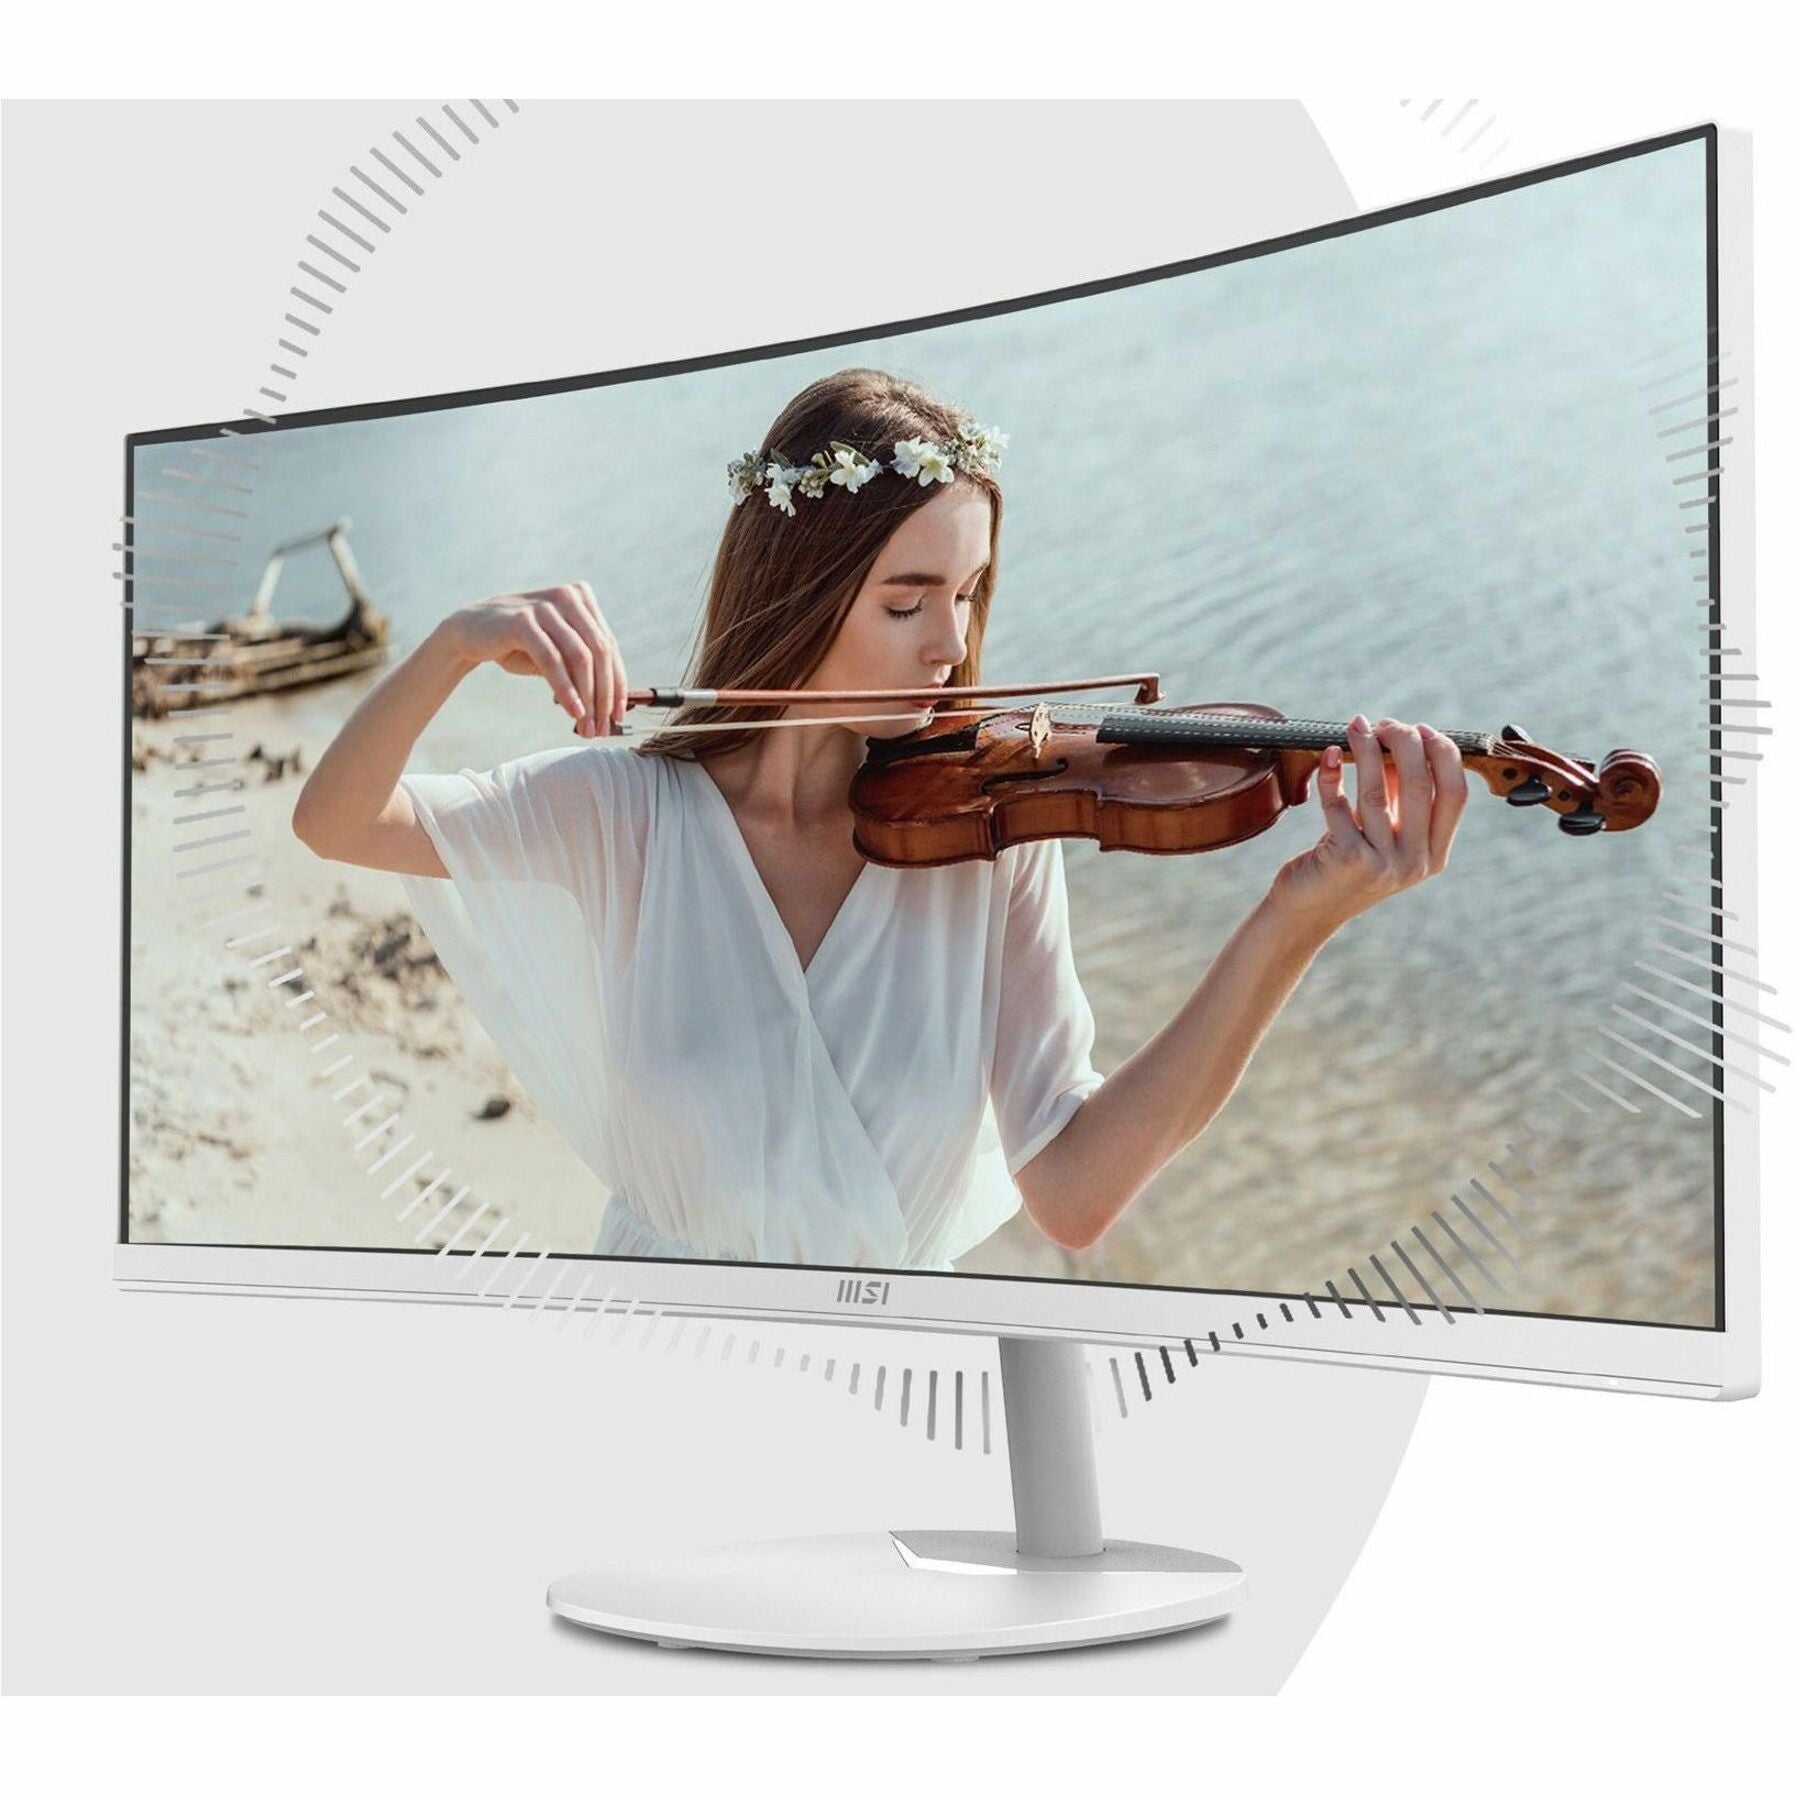 MSI PROMP341CQW Pro MP341CQW Widescreen LCD Monitor, 34" UW-QHD, 100Hz, FreeSync